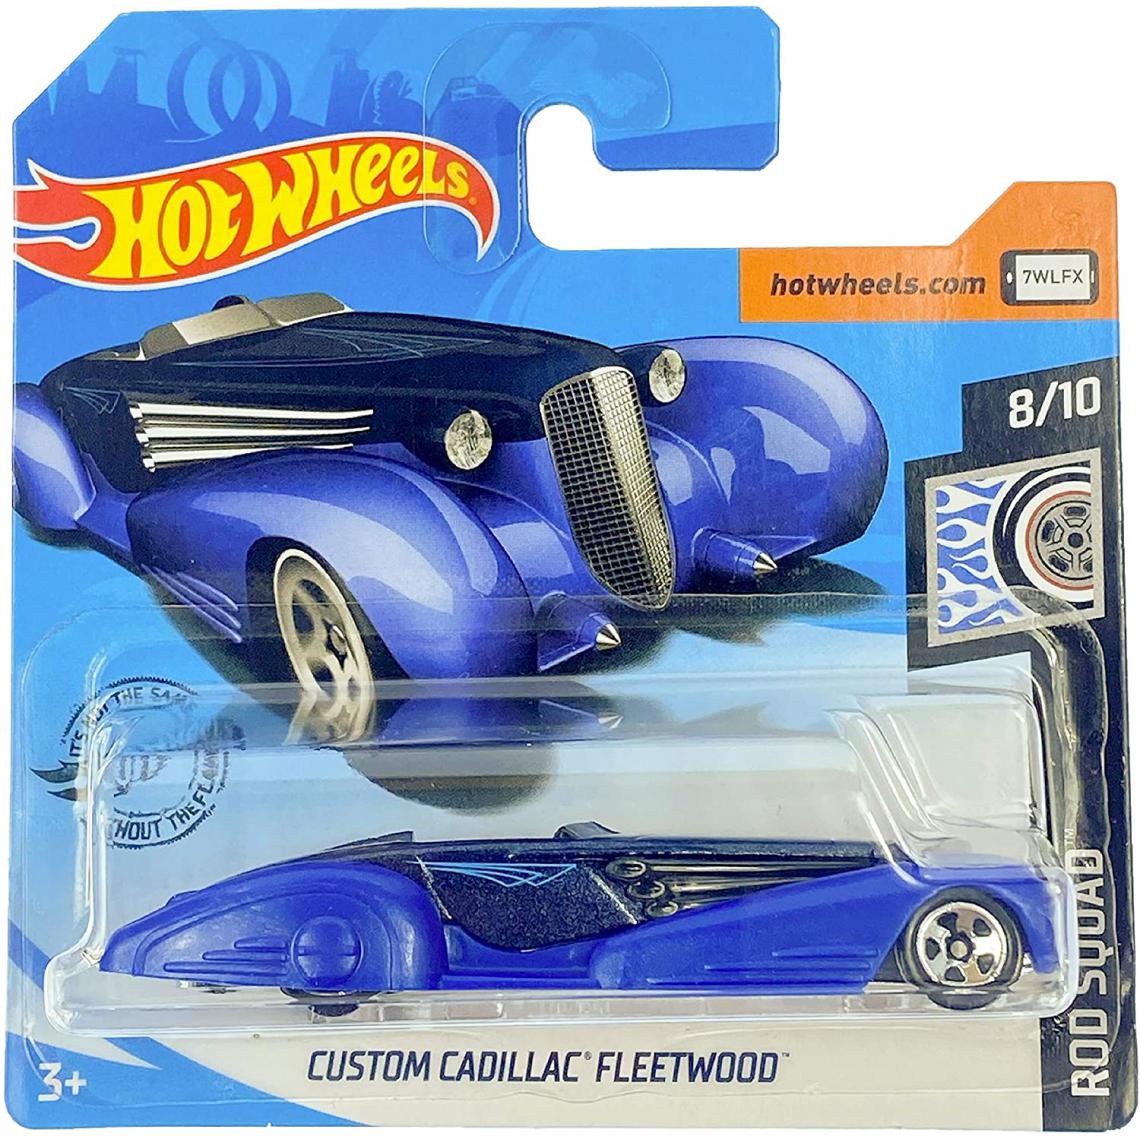 Hot Wheels - véhicule Custom Cadillac Fleetwood 8/10 - Voiture de collection miniature